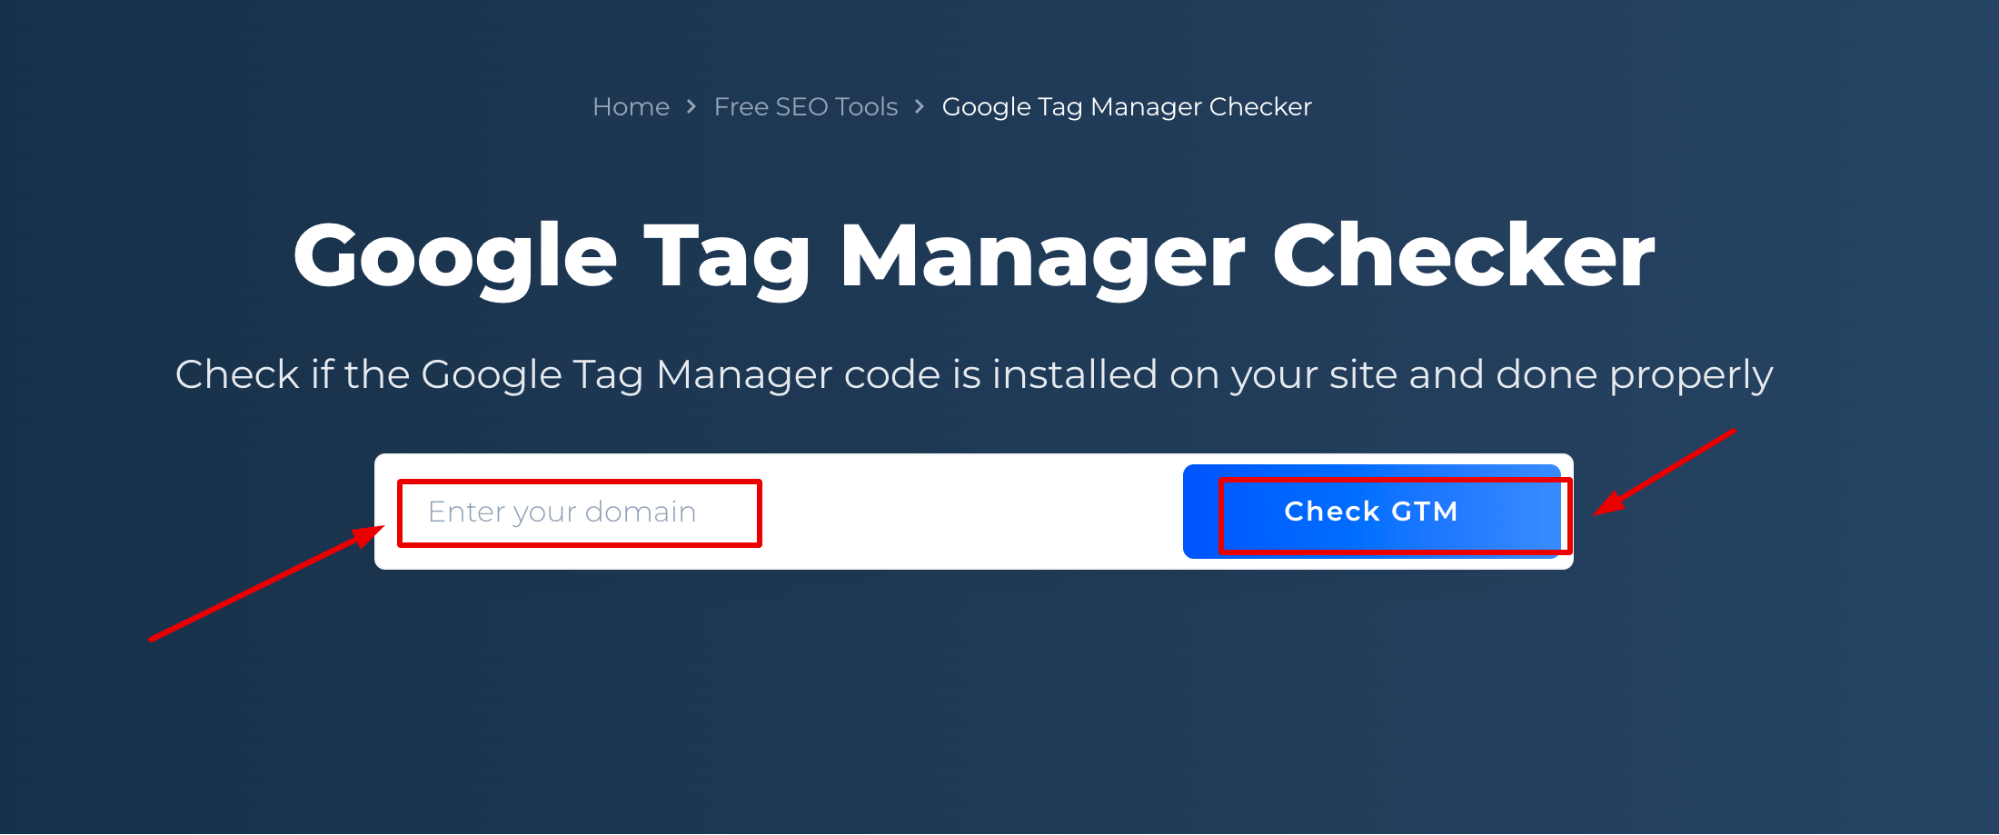 Google Tag Manager Checker